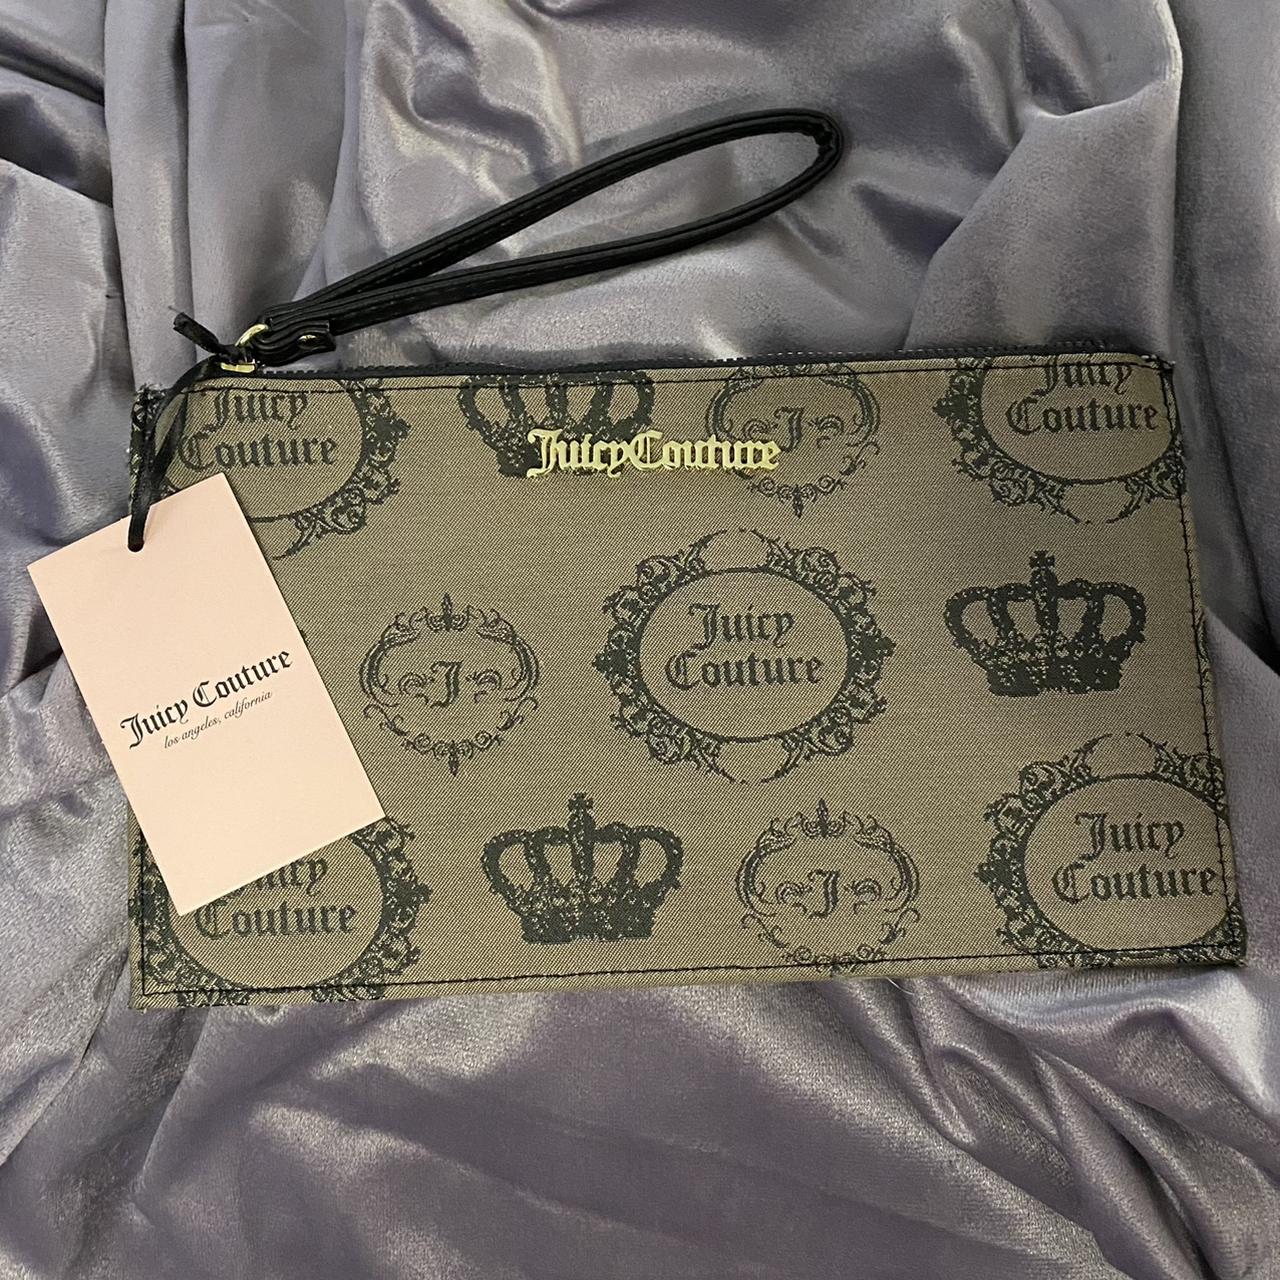 Juicy Couture wristlet wallet - Women's accessories